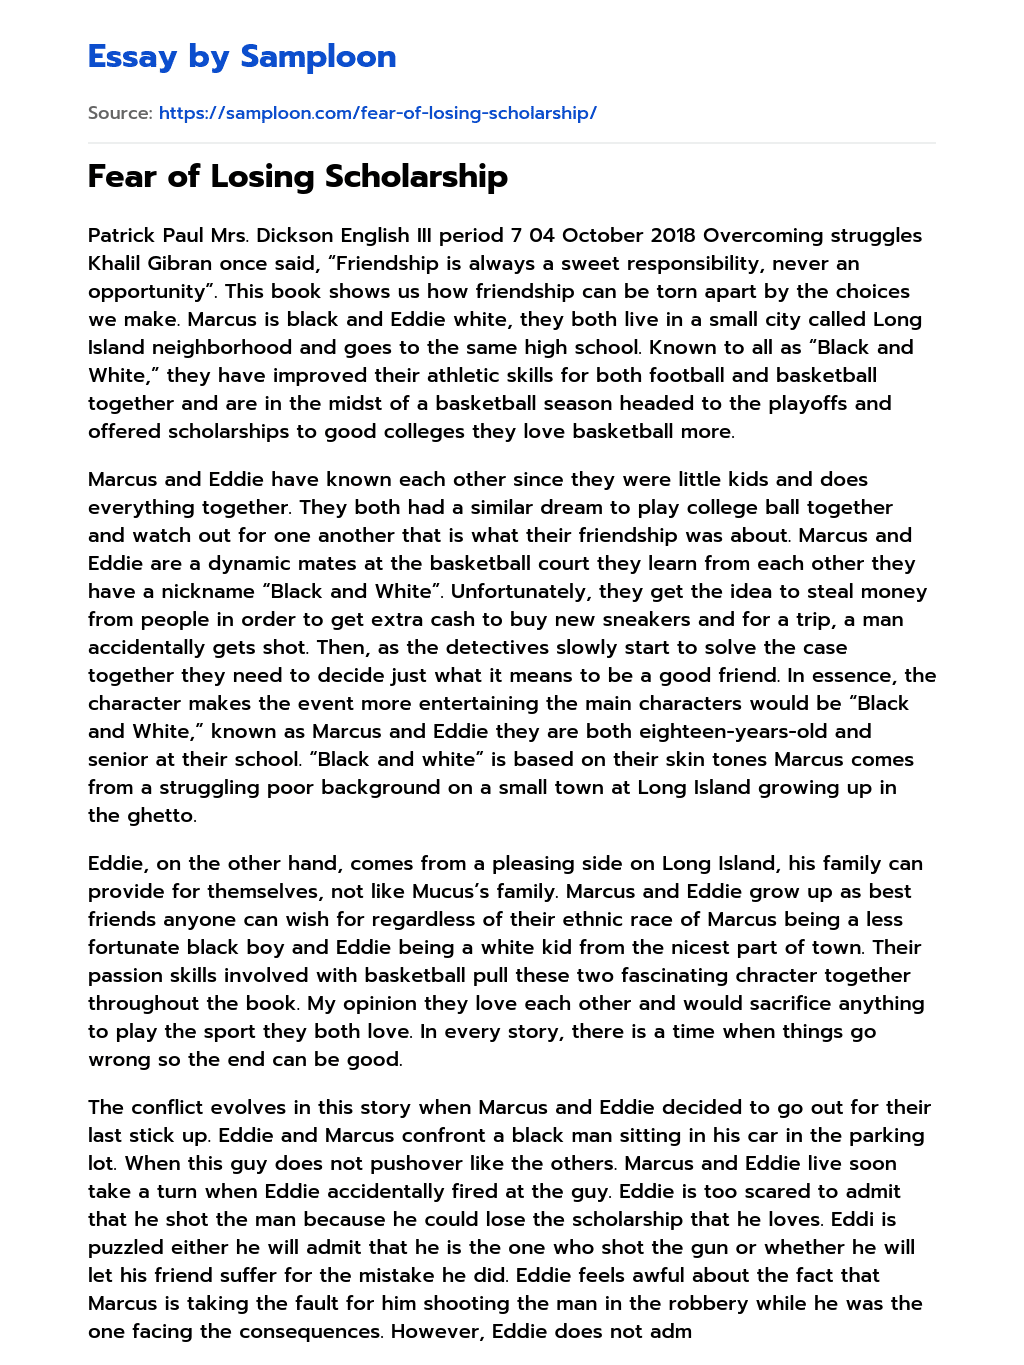 Fear of Losing Scholarship essay